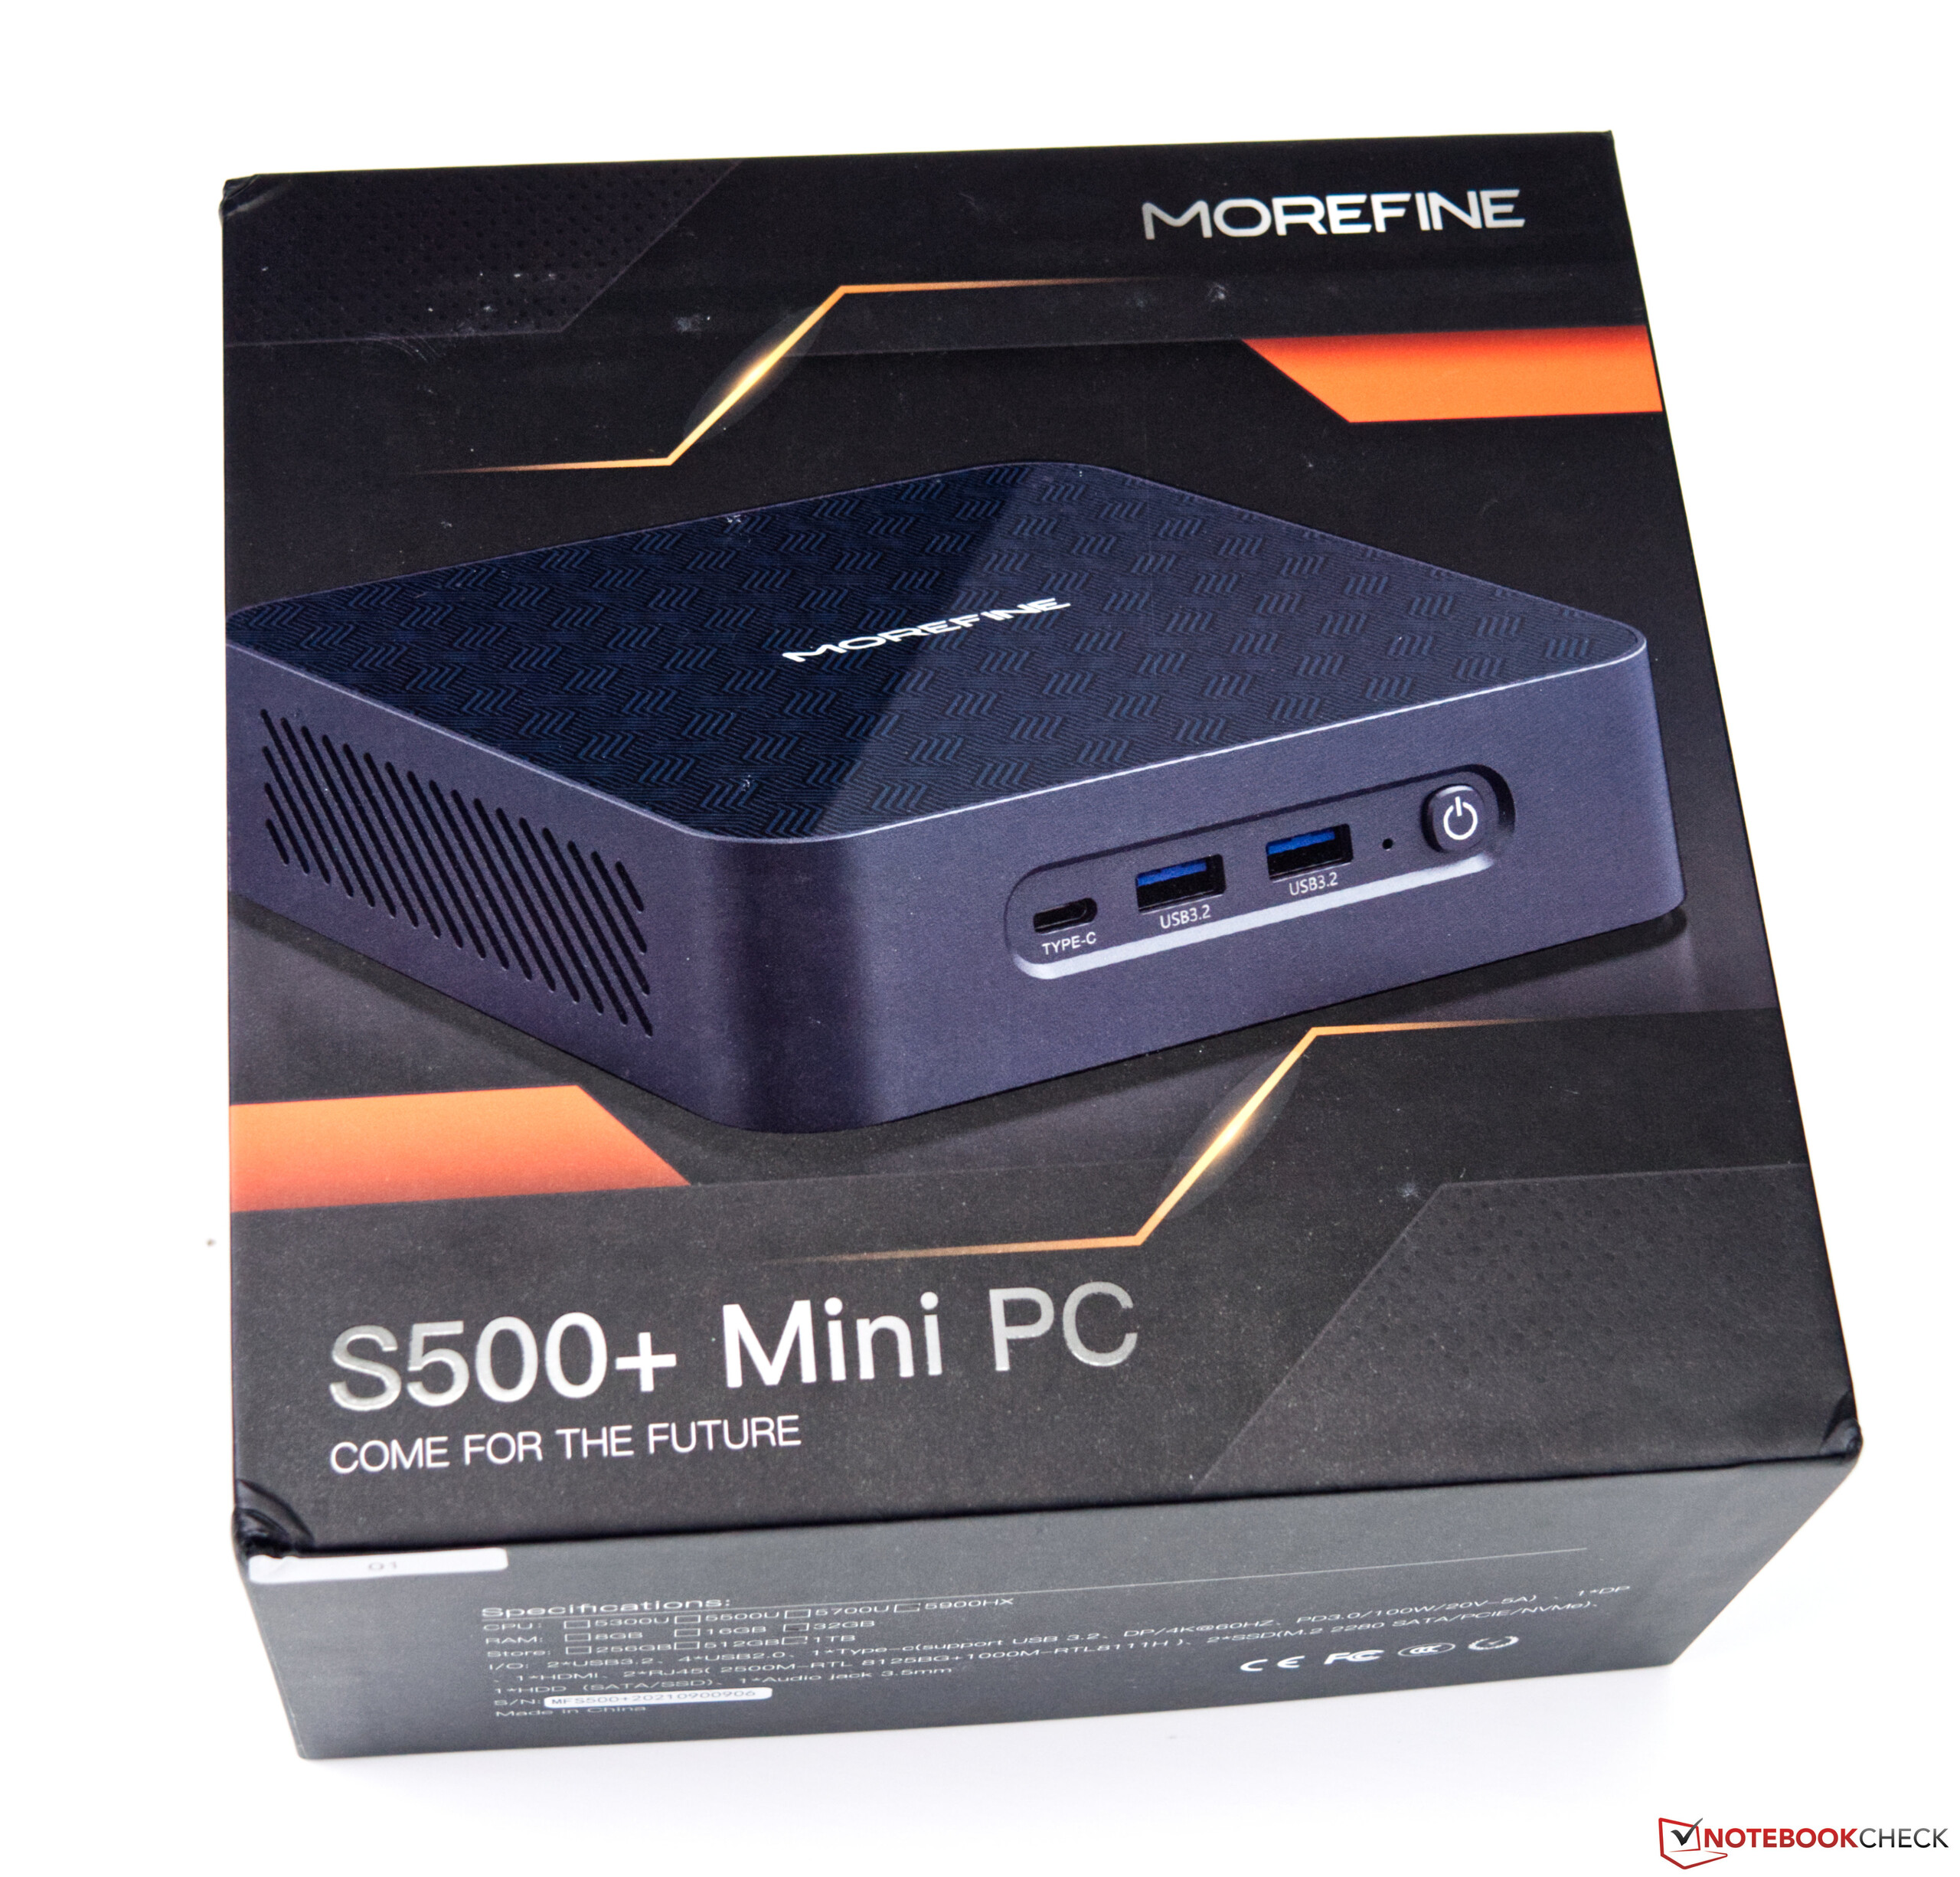 Morefine S500 在审查中 Amd Ryzen 9 5900hx配备32gb内存和1tb Ssd的迷你电脑 Notebookcheck